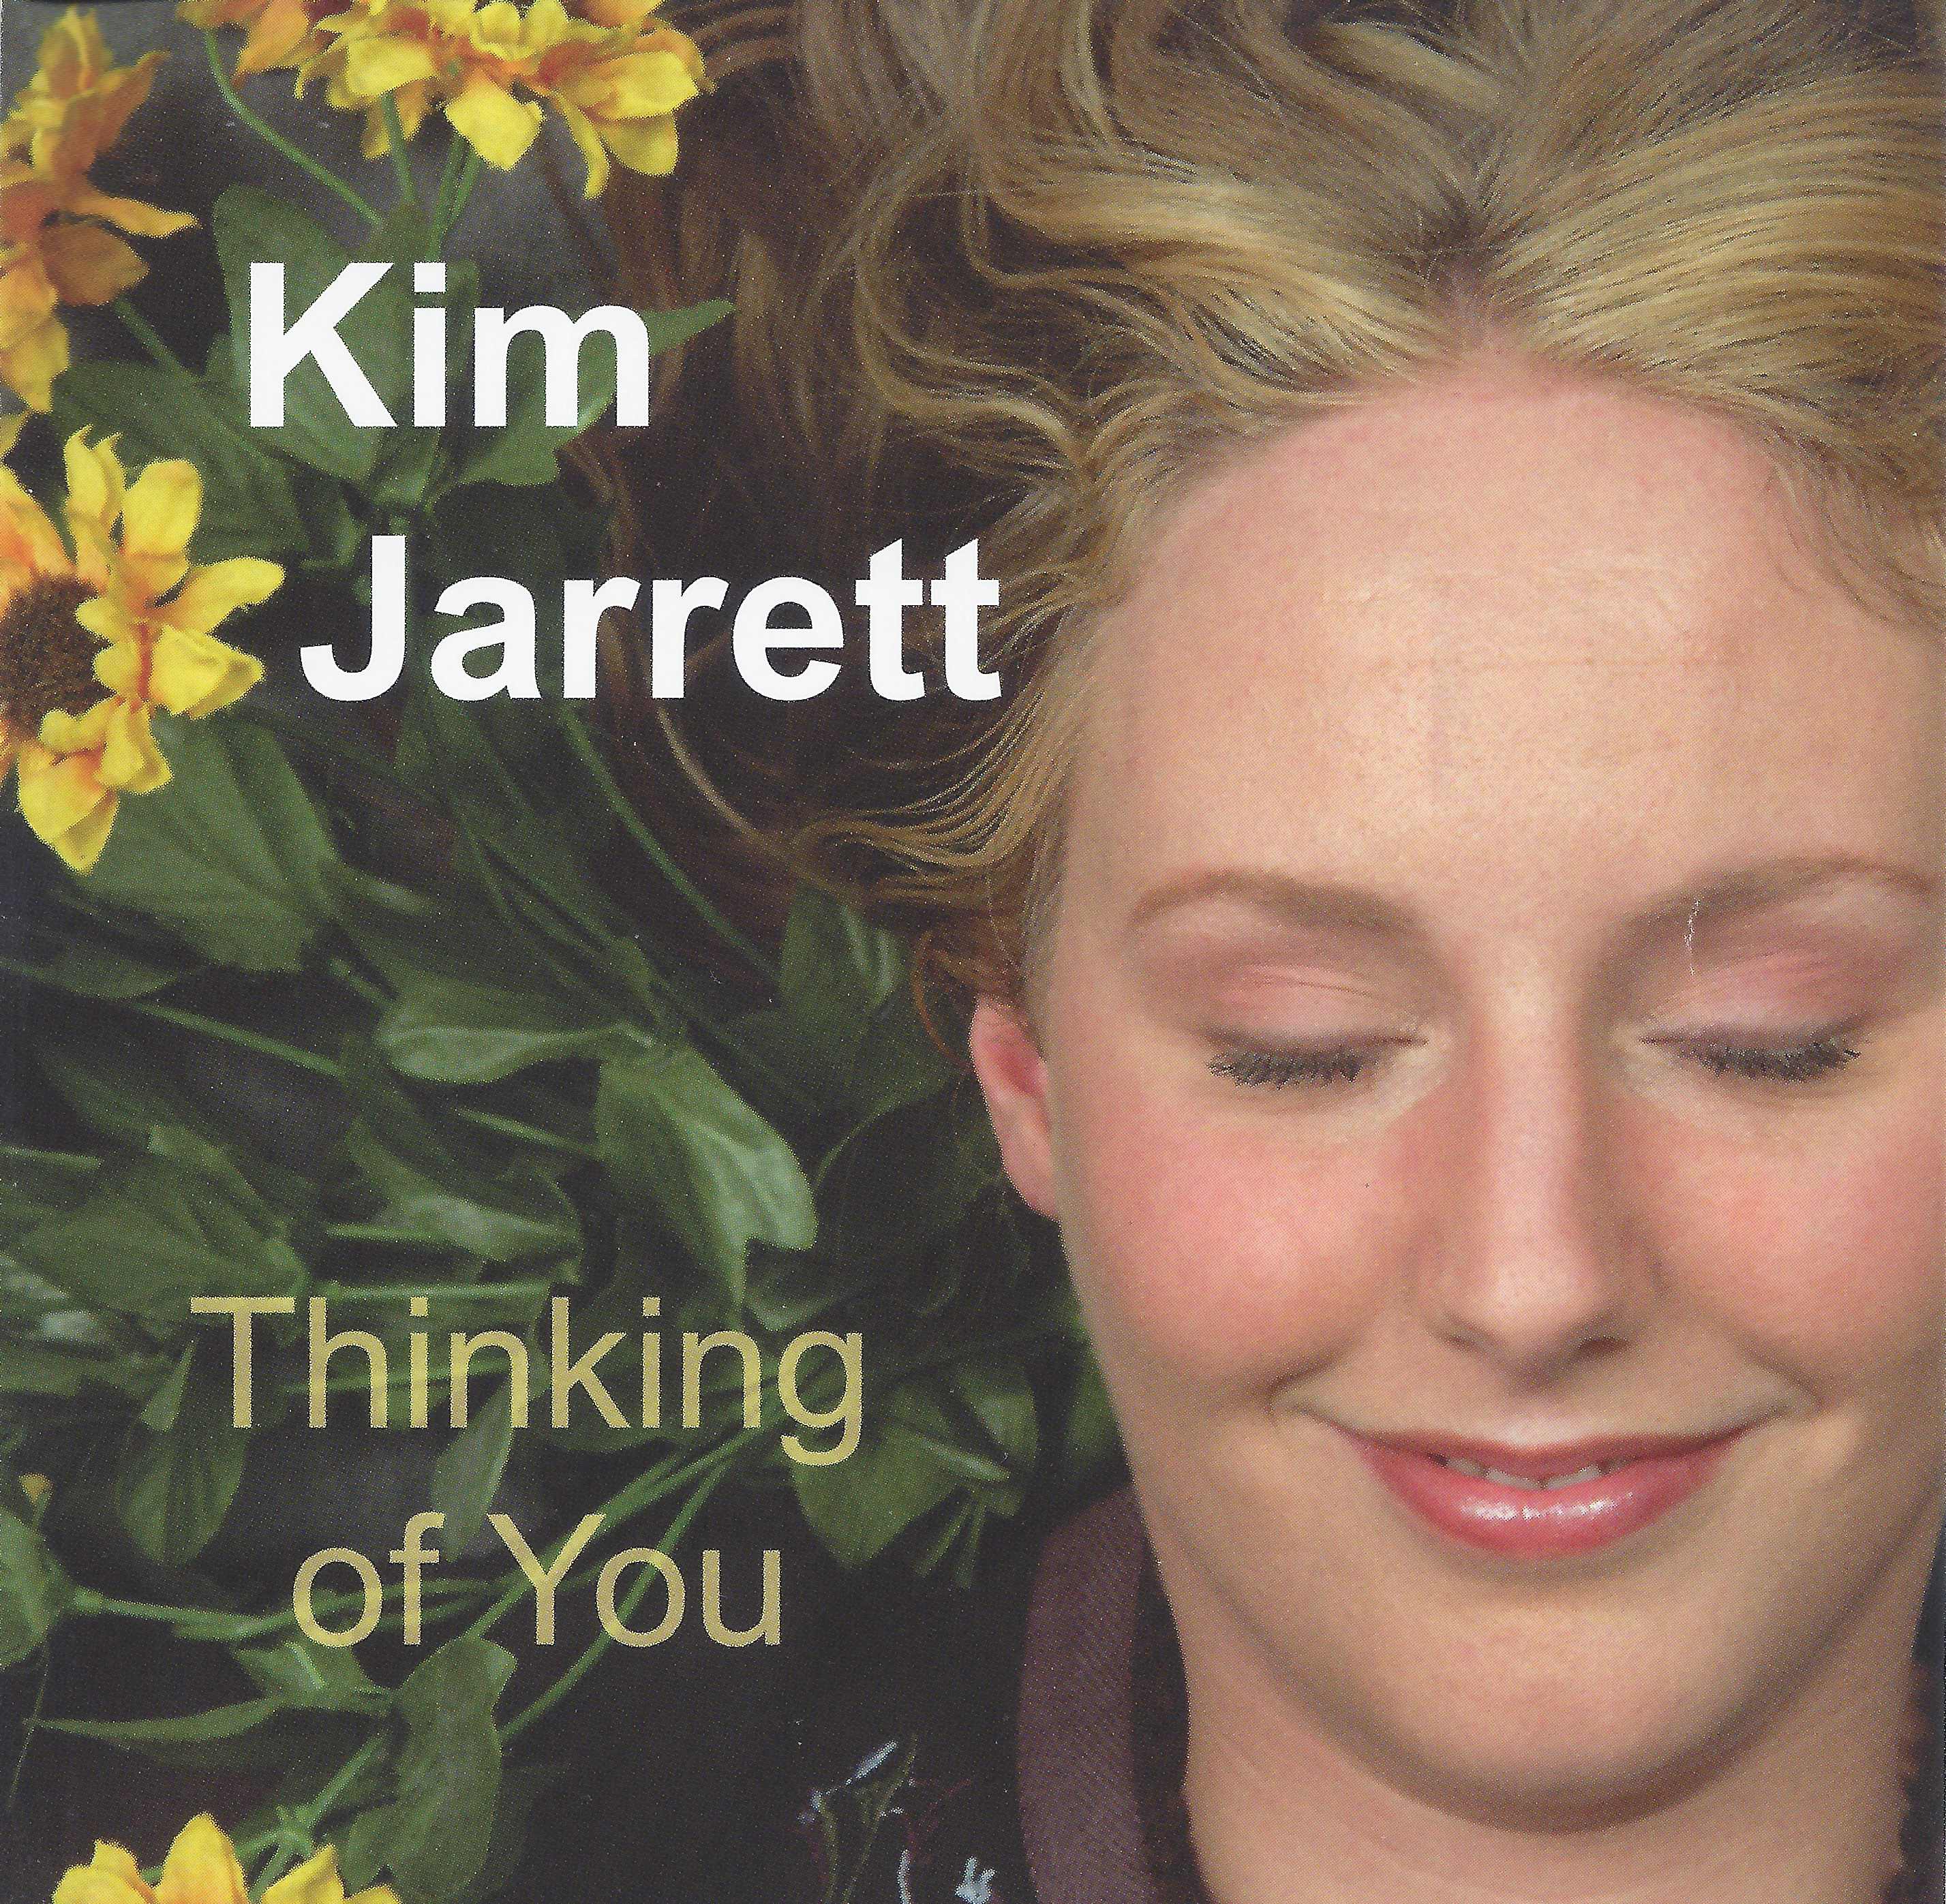 Thinking of You Album - Kim Jarrett